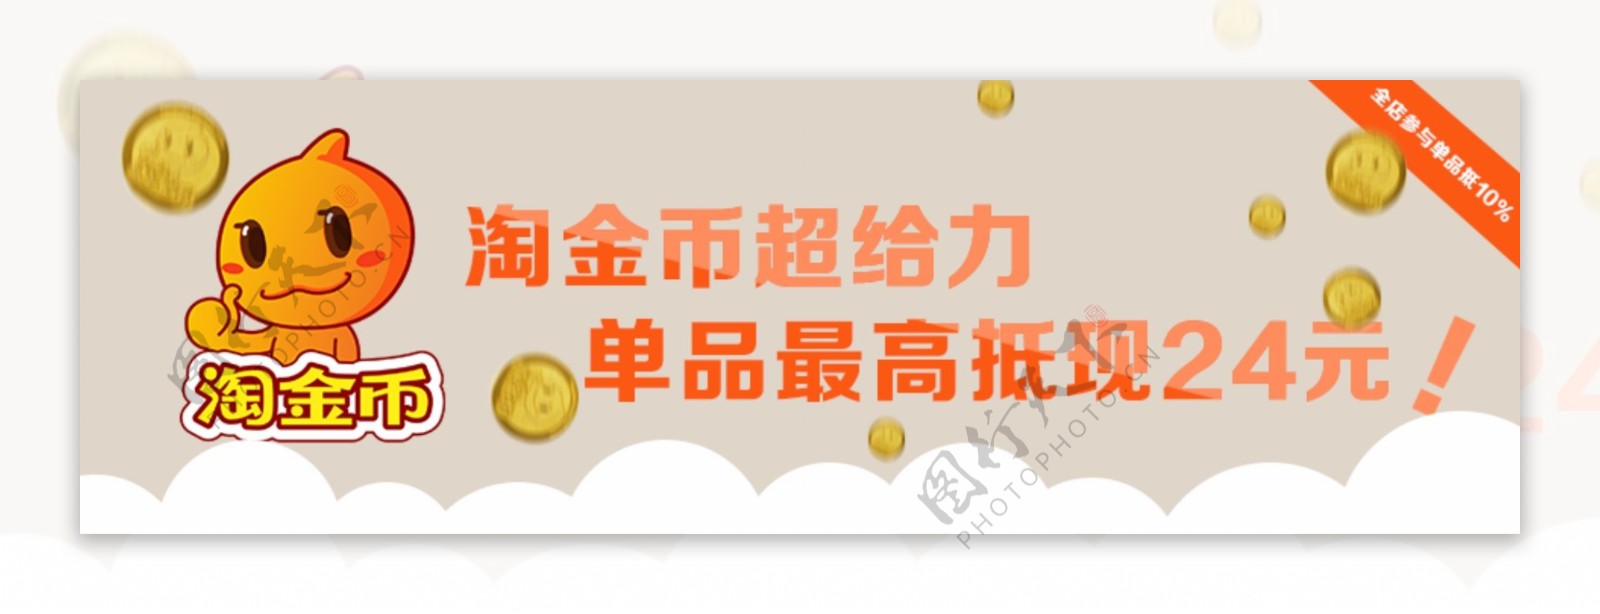 淘金币banner图片